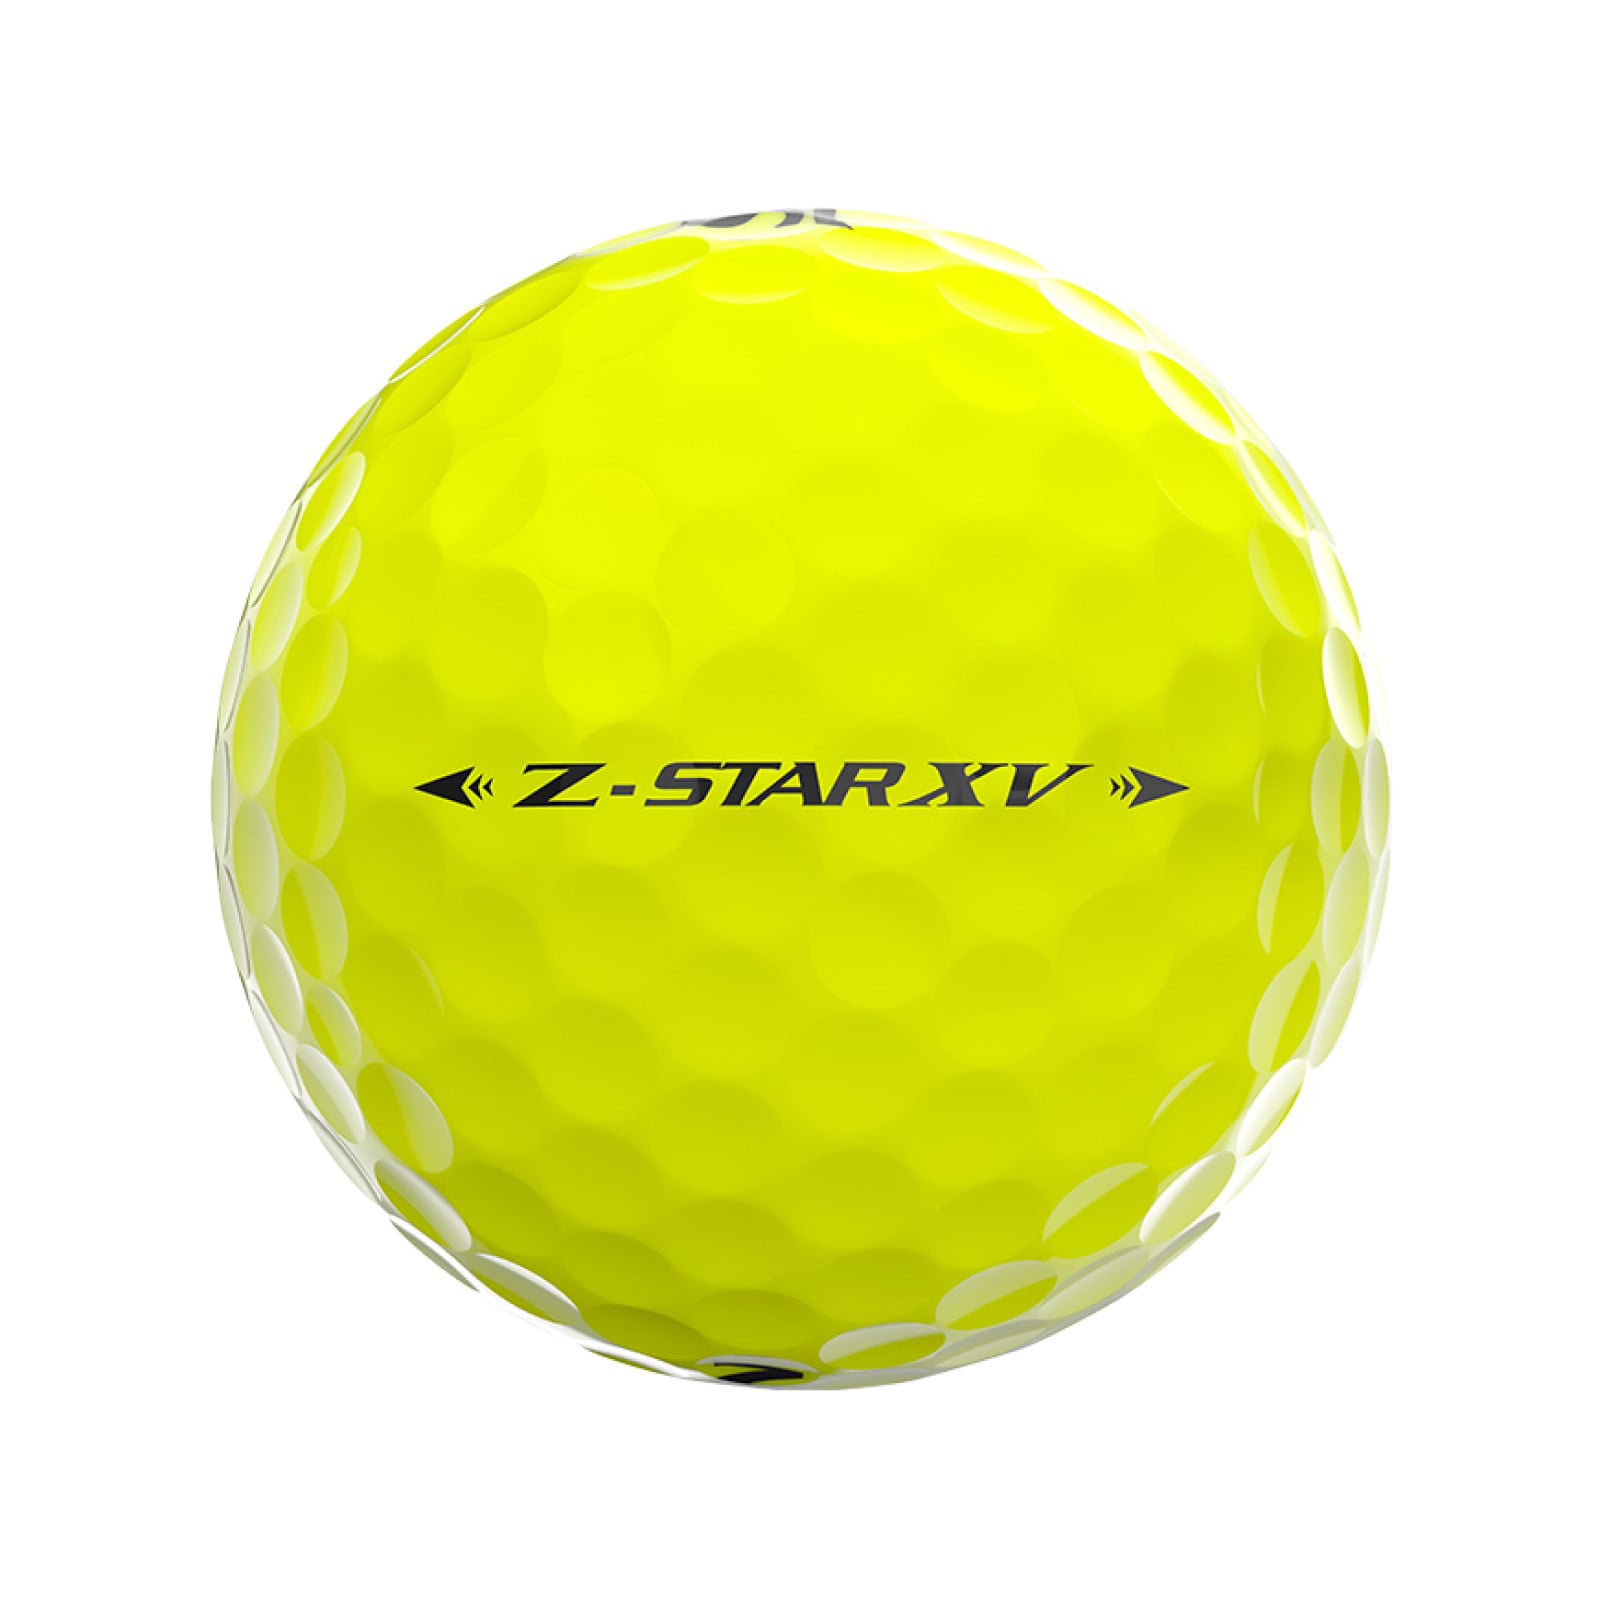 Srixon Z-Star XV Tour Yellow Golf Ball Dozen - Walmart.com